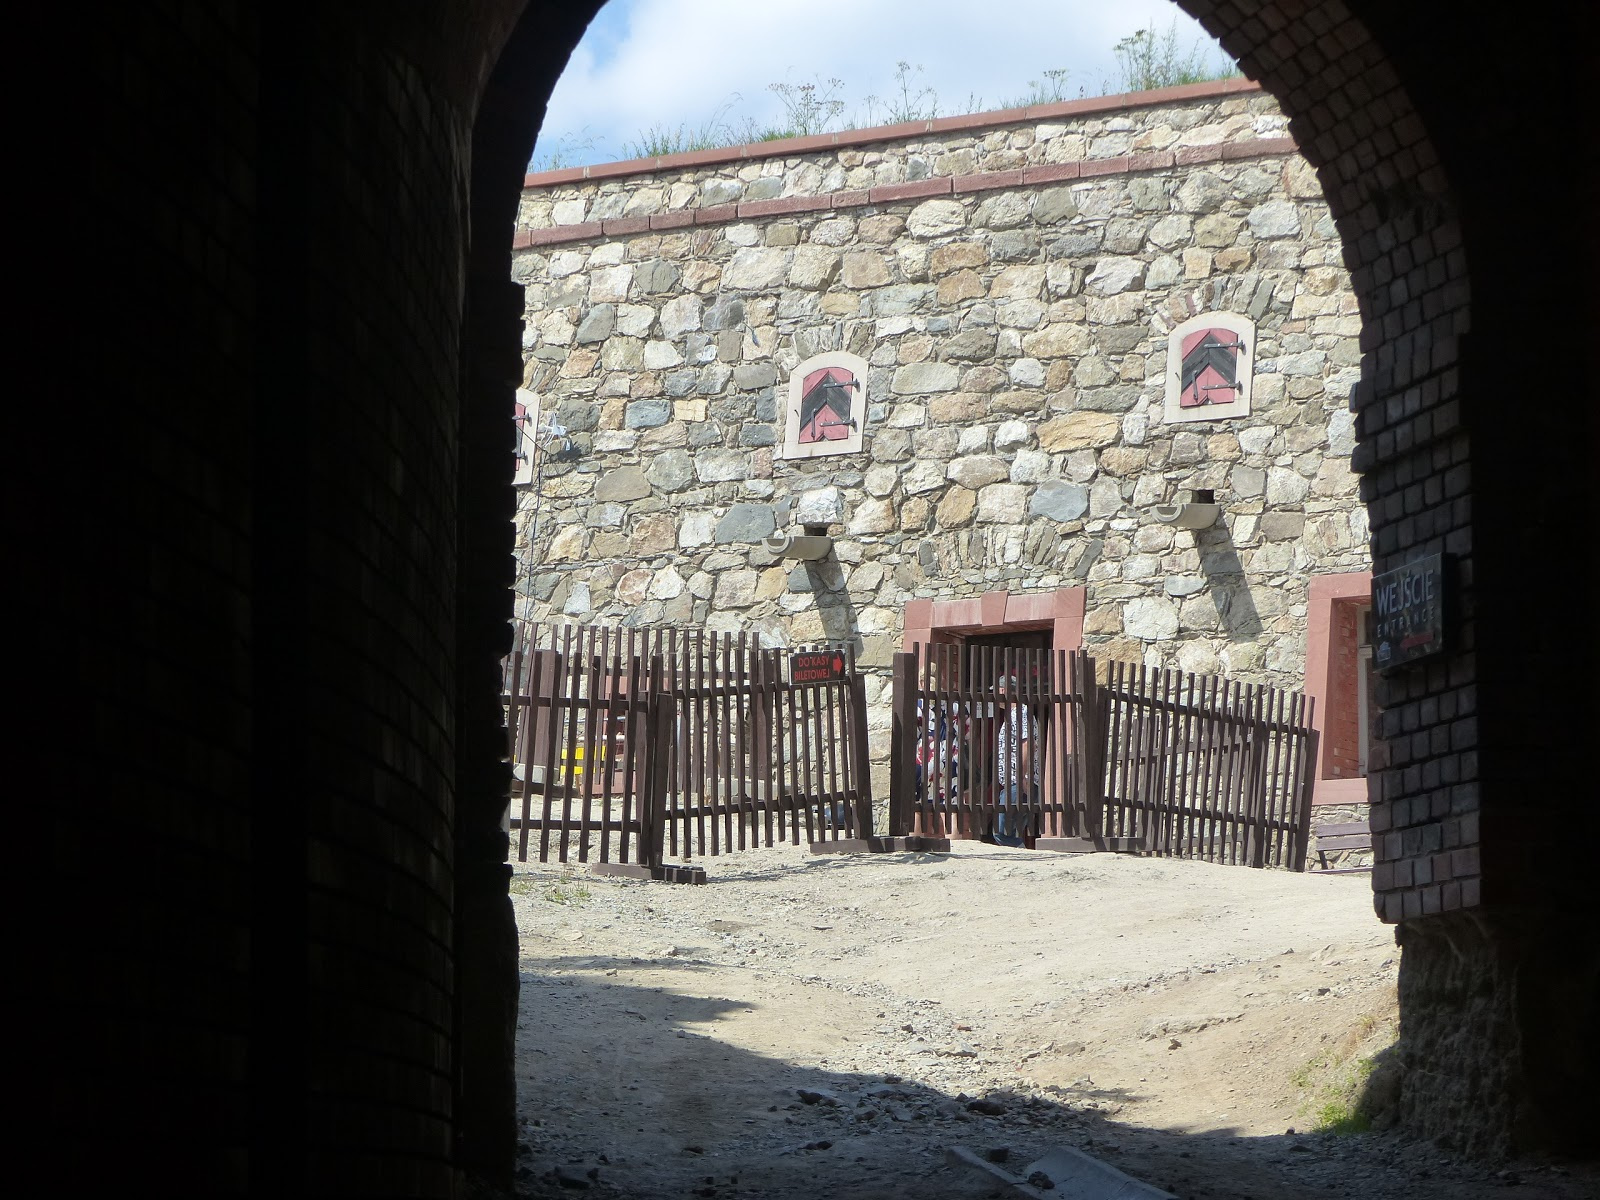 Twierdza Srebrna Góra, Fort Wysoka Skala, SzG3